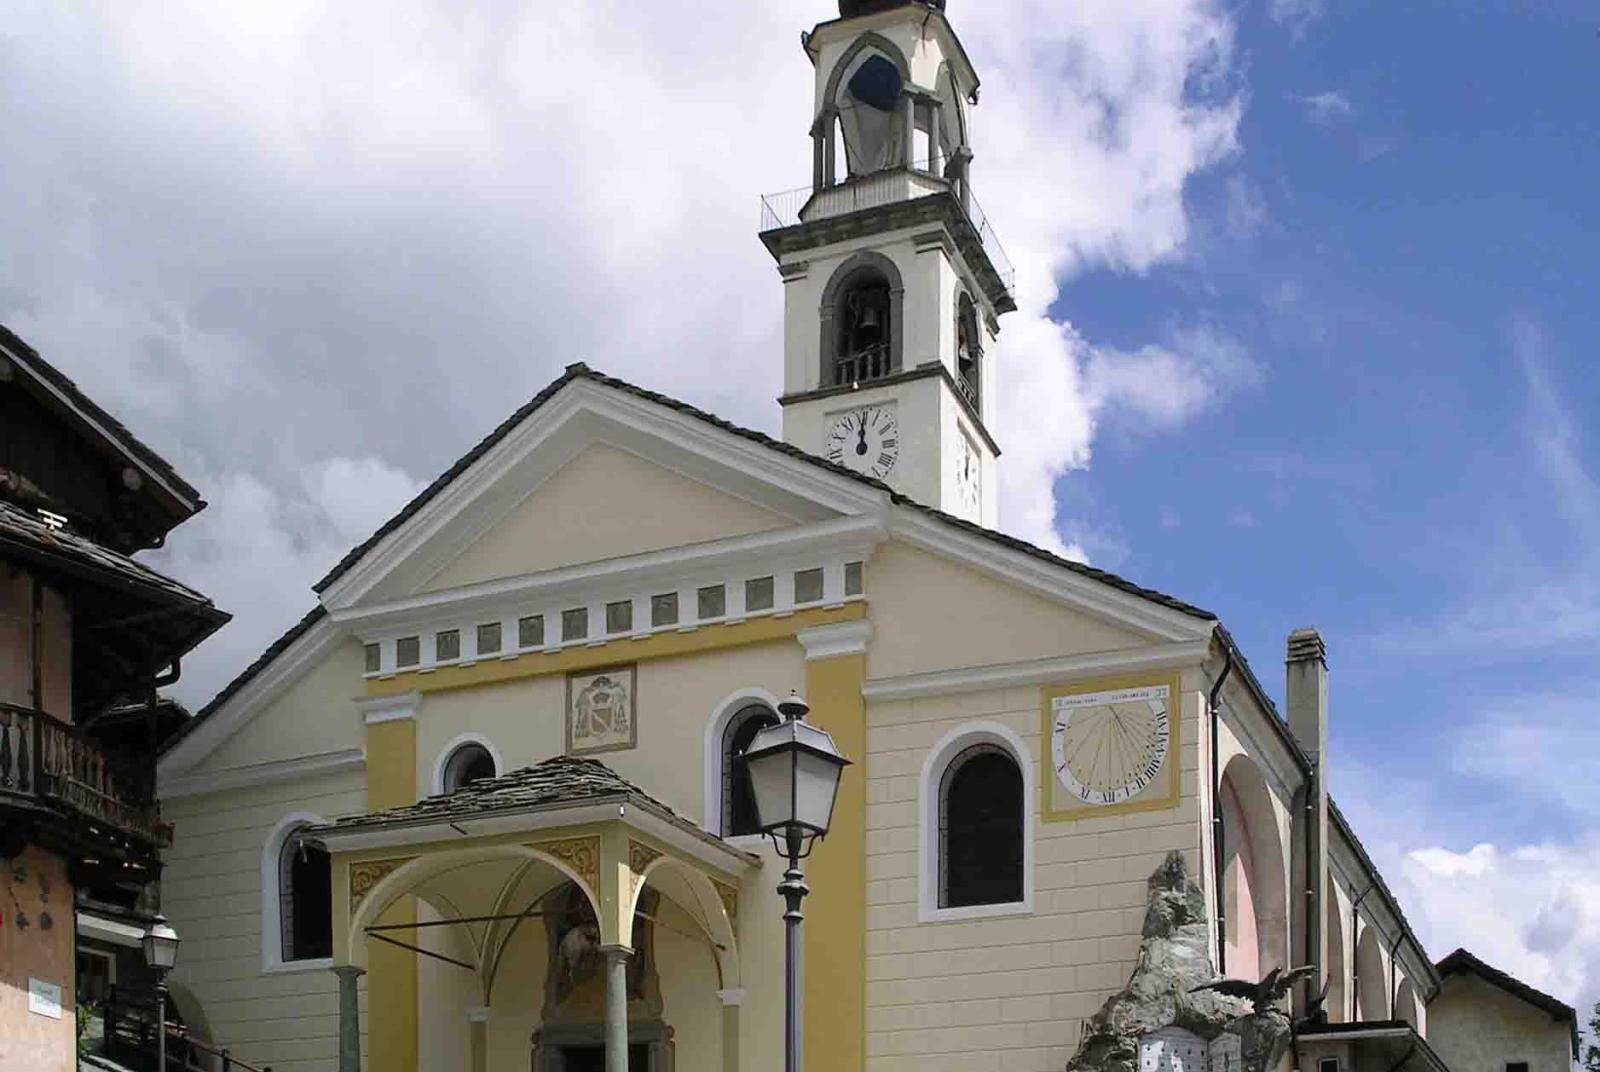 HISTORIC VILLAGE OF ANTAGNOD –  ANTAGNOD CHURCH